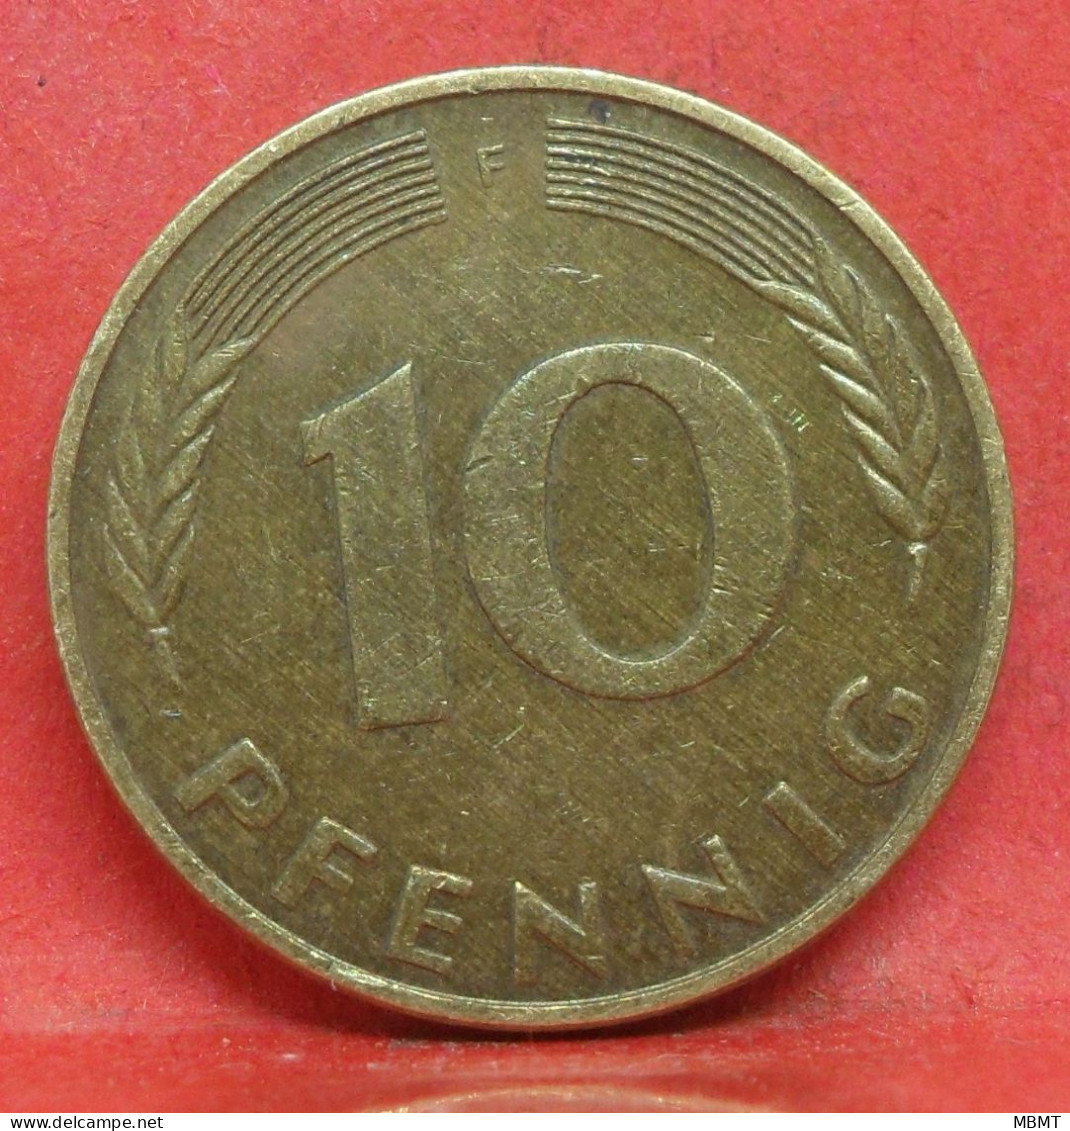 10 Pfennig 1989 F - TTB - Pièce Monnaie Allemagne - Article N°1520 - 10 Pfennig